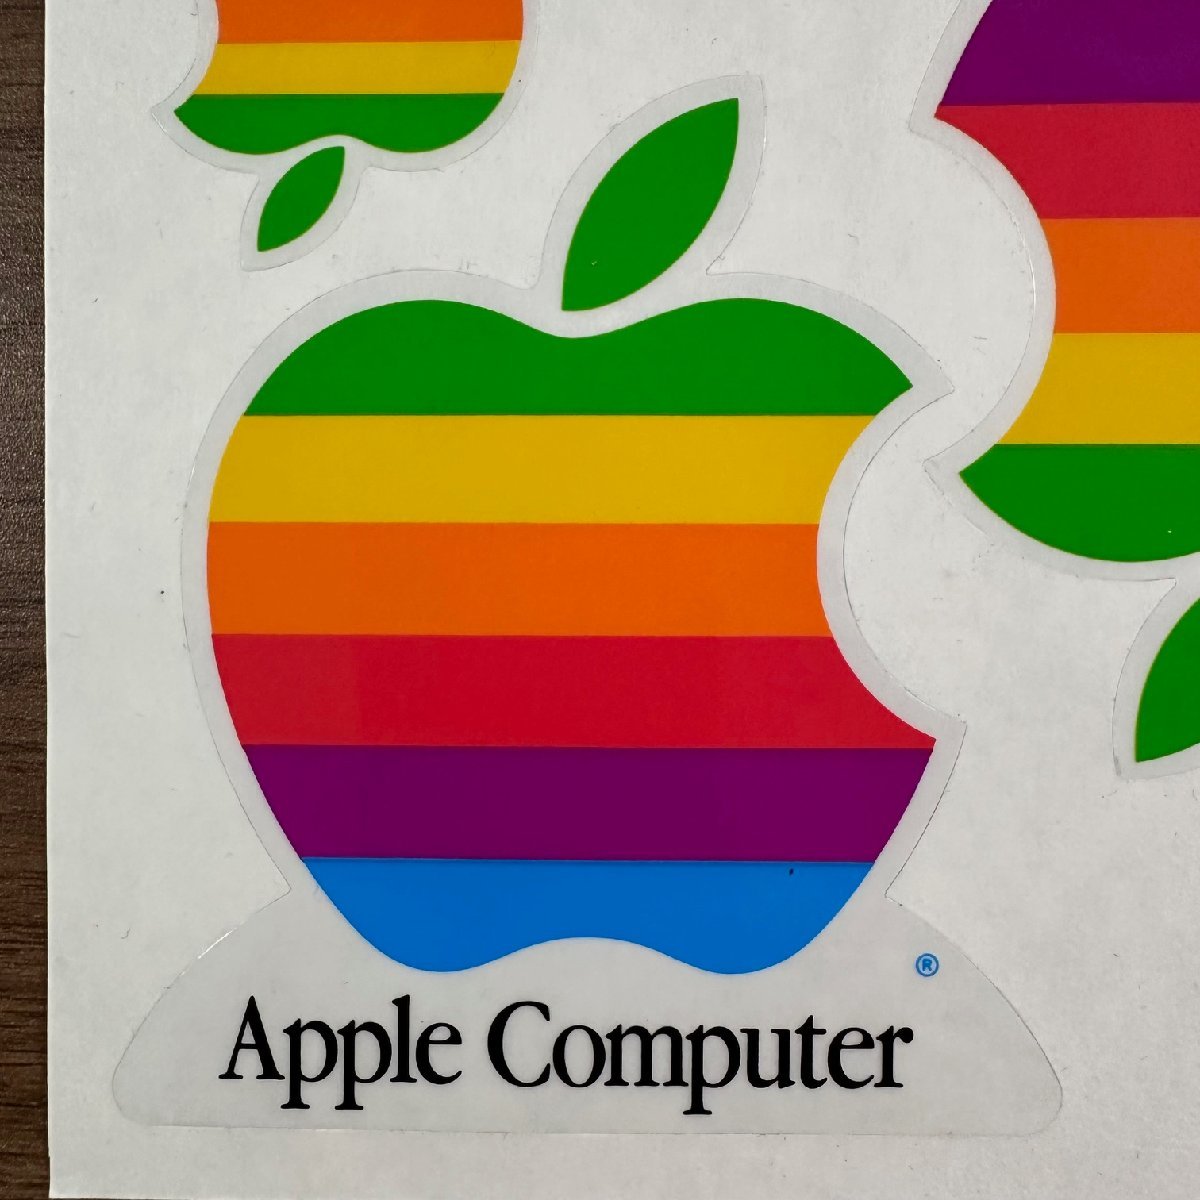 【Apple Computer】旧虹色リンゴシール レインボーステッカー 希少 収集家放出品 99_画像2